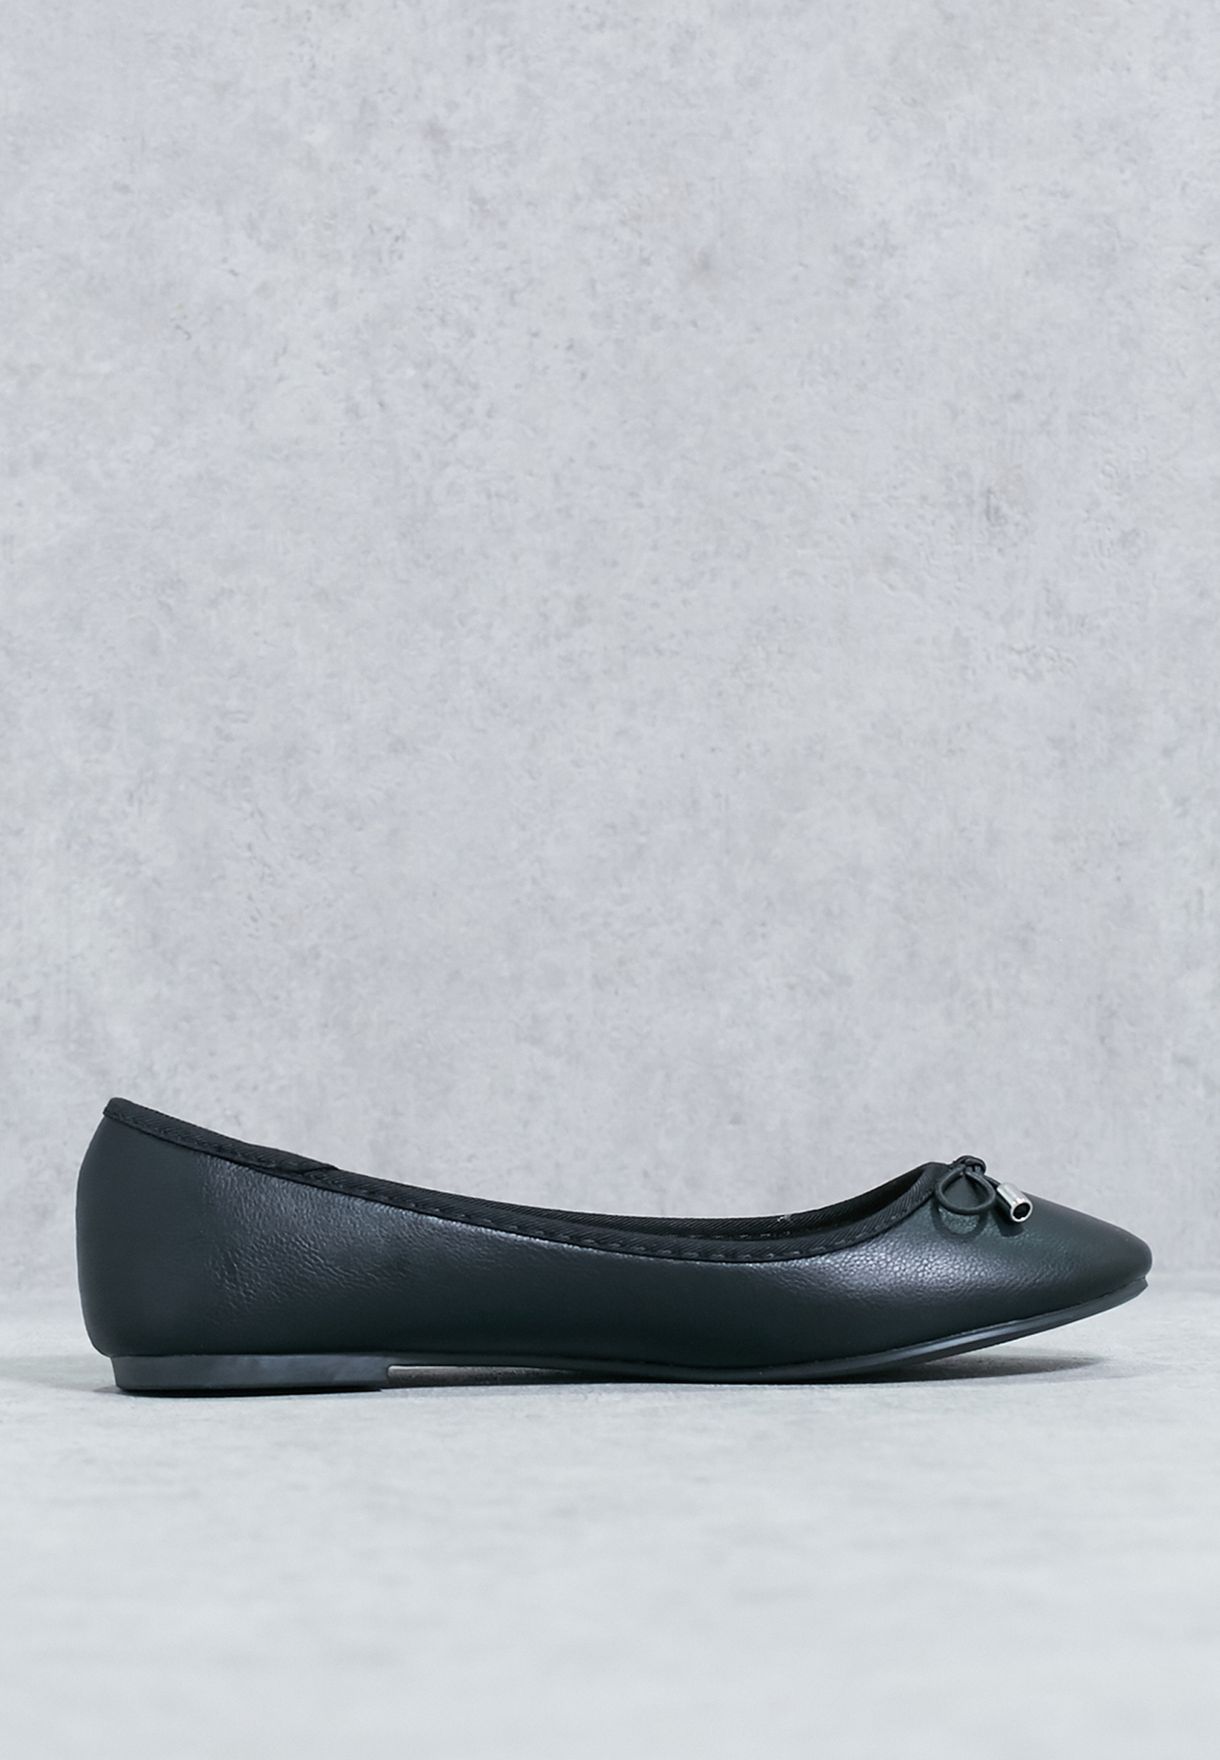 dorothy perkins black flat shoes